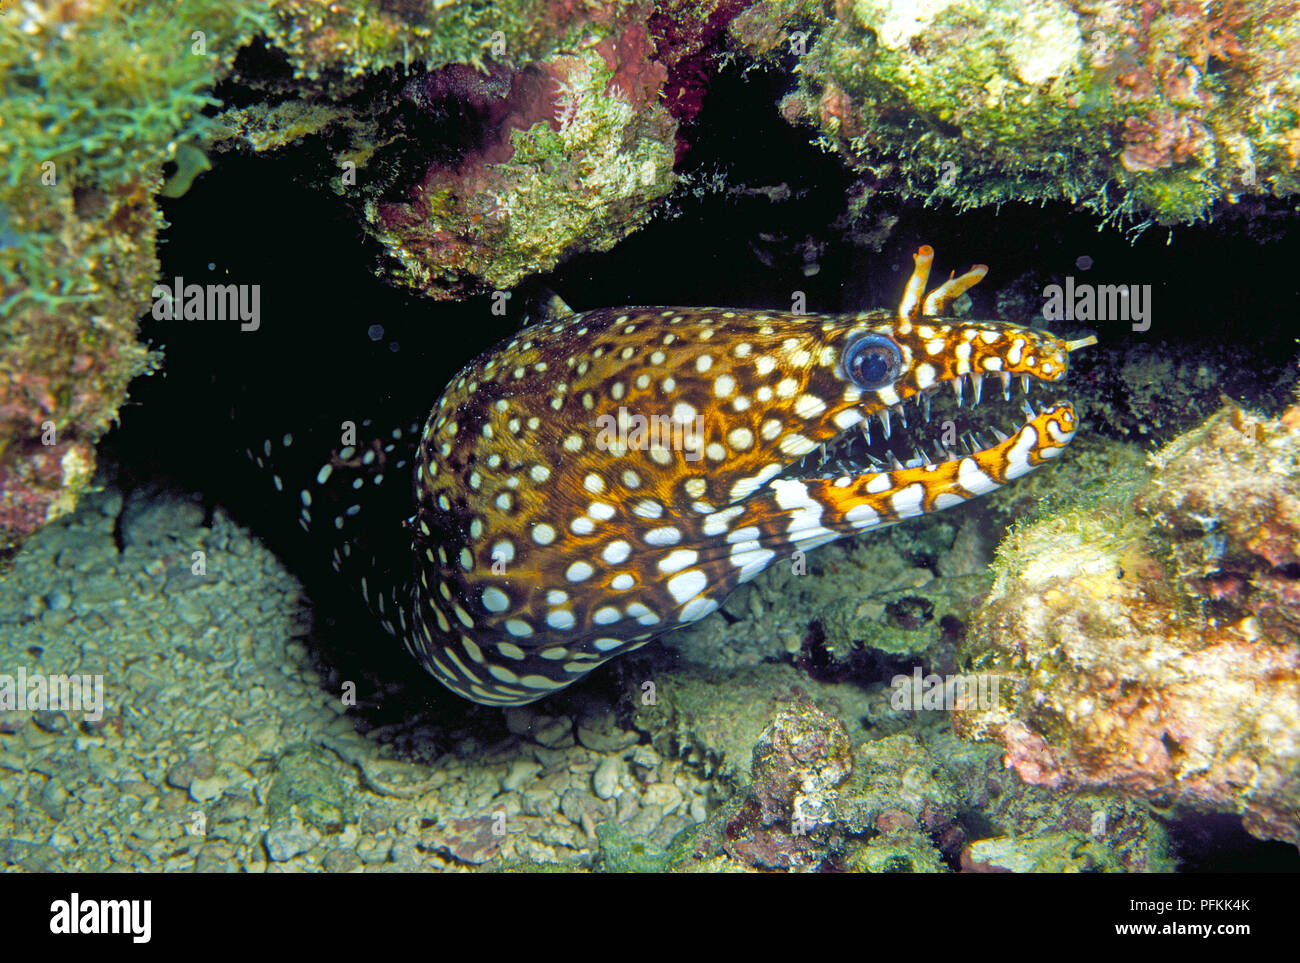 Drachenmuraene (Enchelycore pardalis) im Korallenriff, Hawai | Leopard moray eel or Dragon moray eel (Enchelycore pardalis) at coral reef, Hawaii Stock Photo